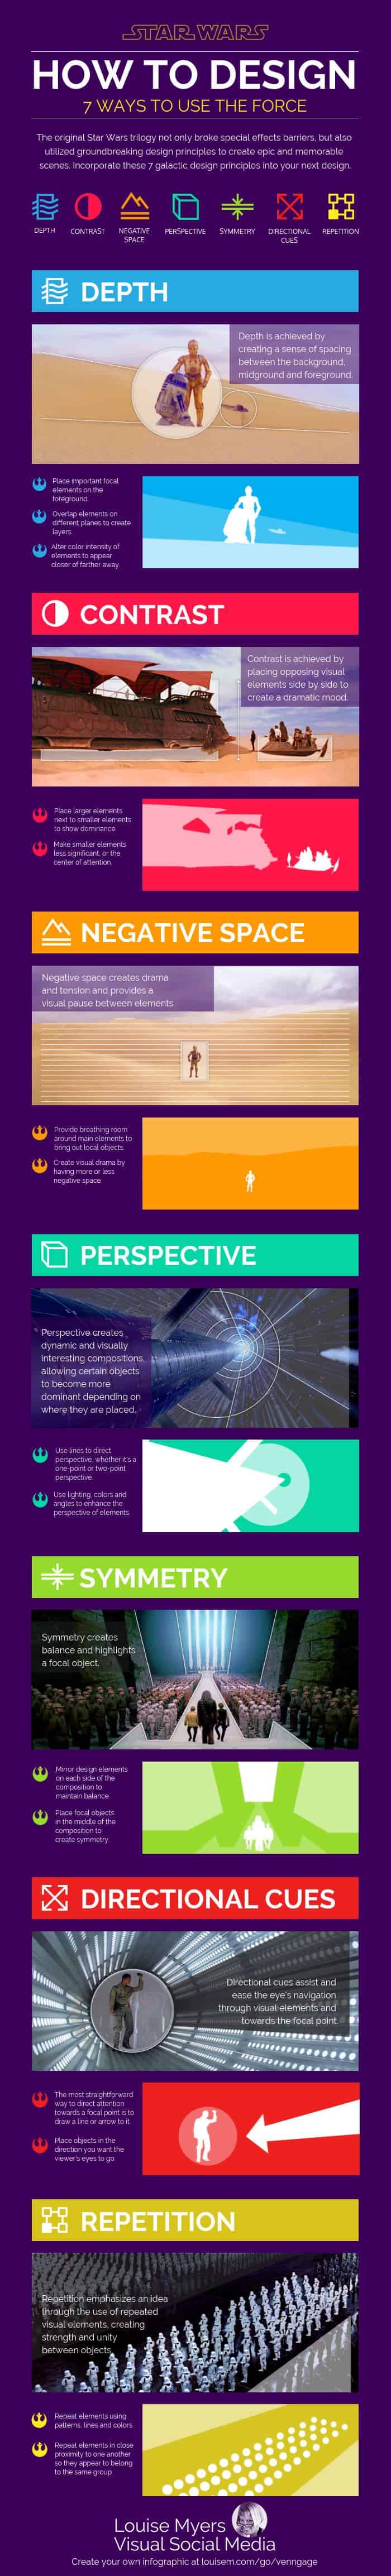 epic design principles infographic